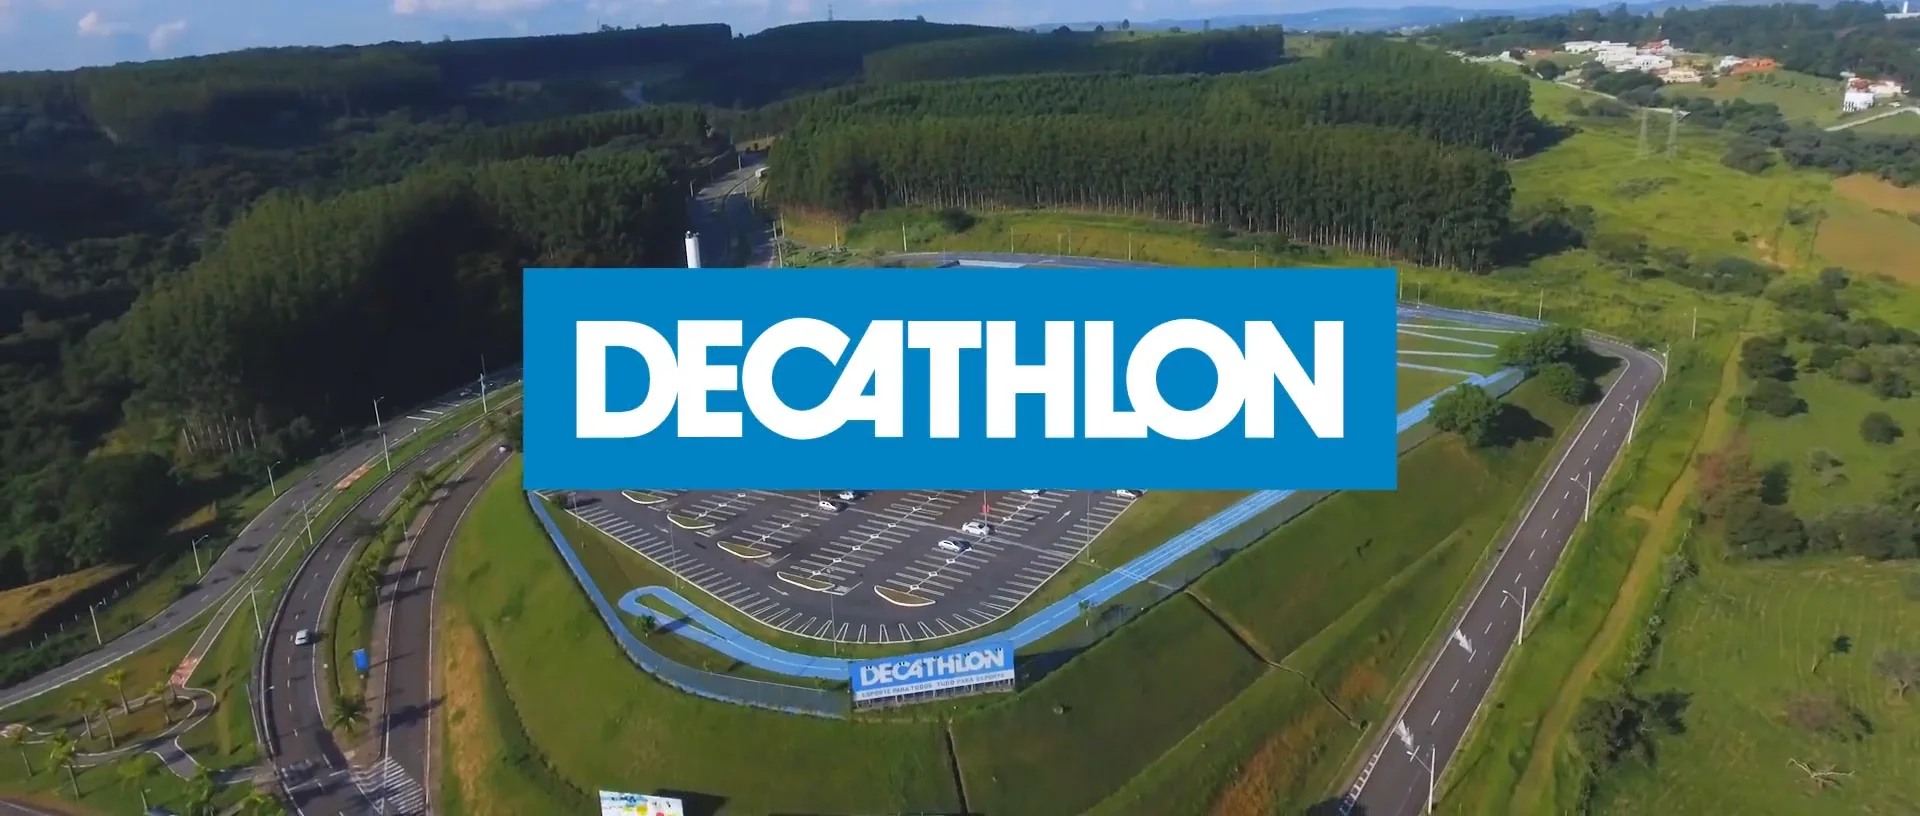 Decathlon Brasil (Loja Campinas) added - Decathlon Brasil